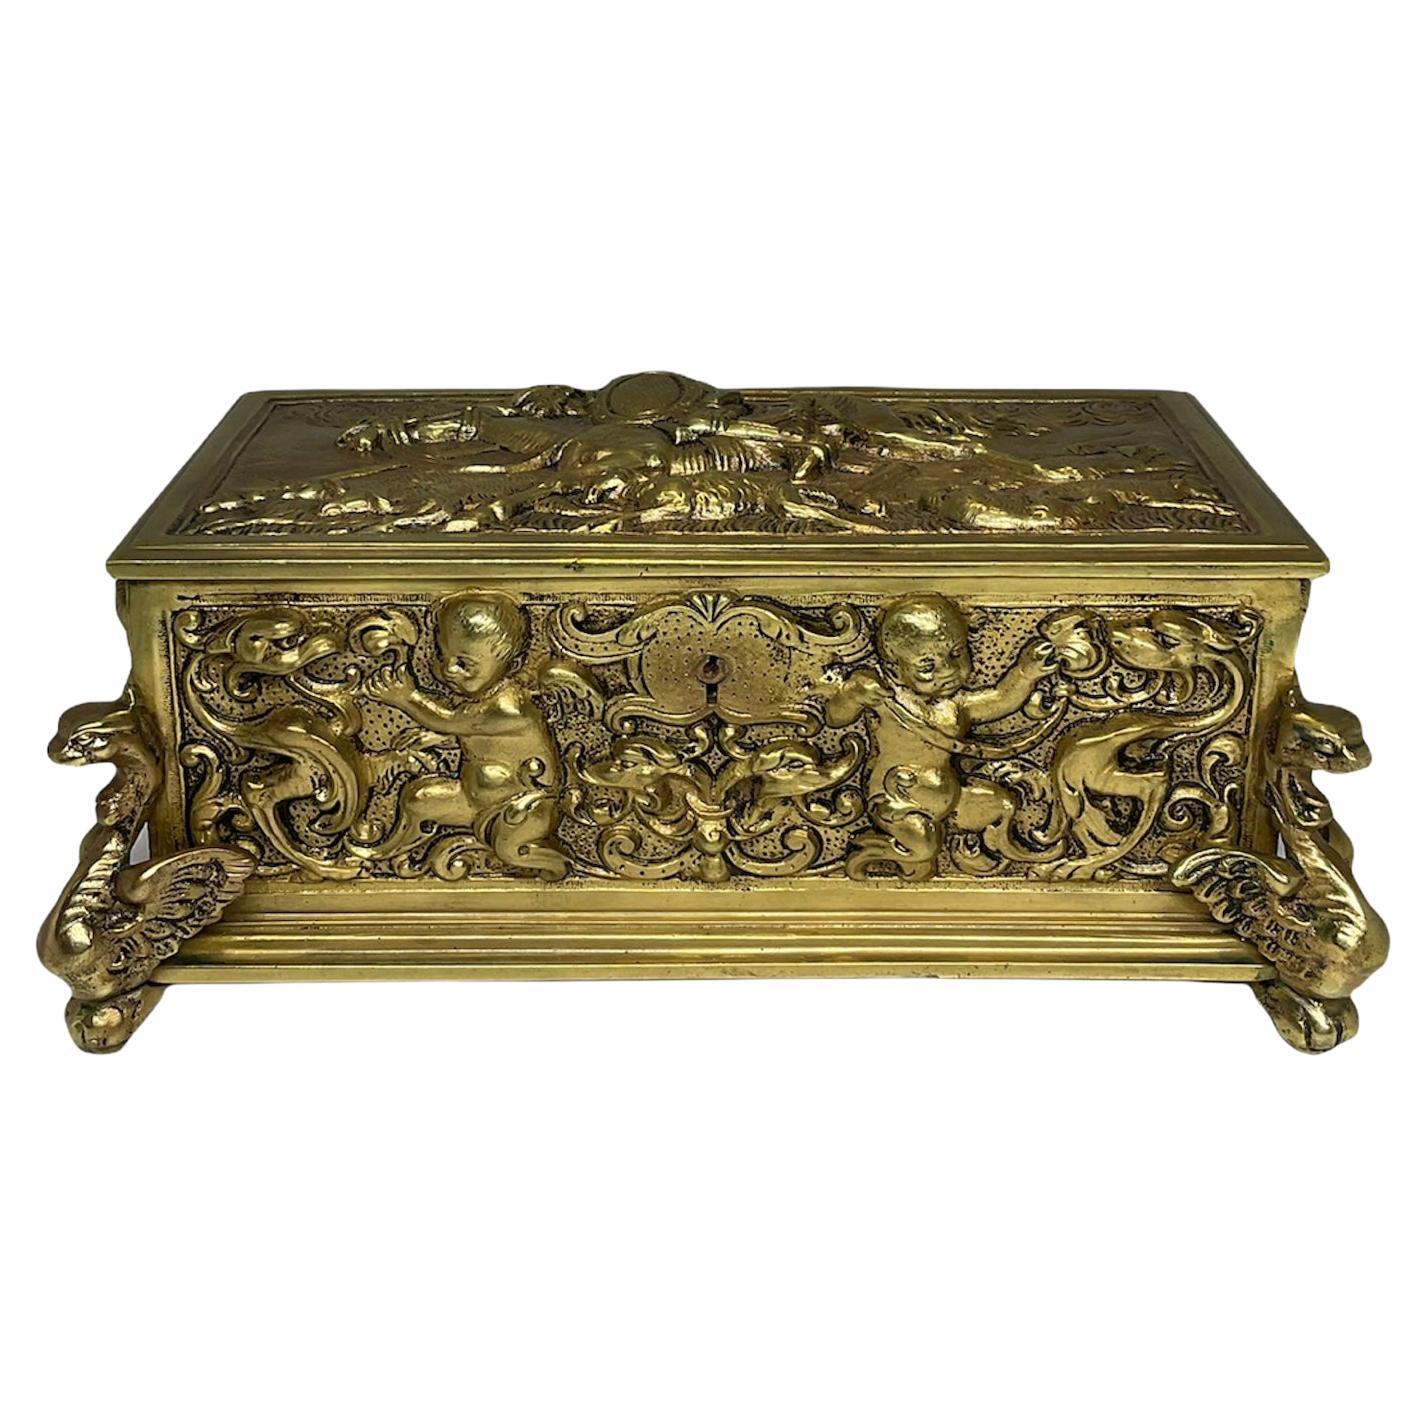 Gilt Heavy Bronze Repousse Rectangular Jewelry/Decorative Box